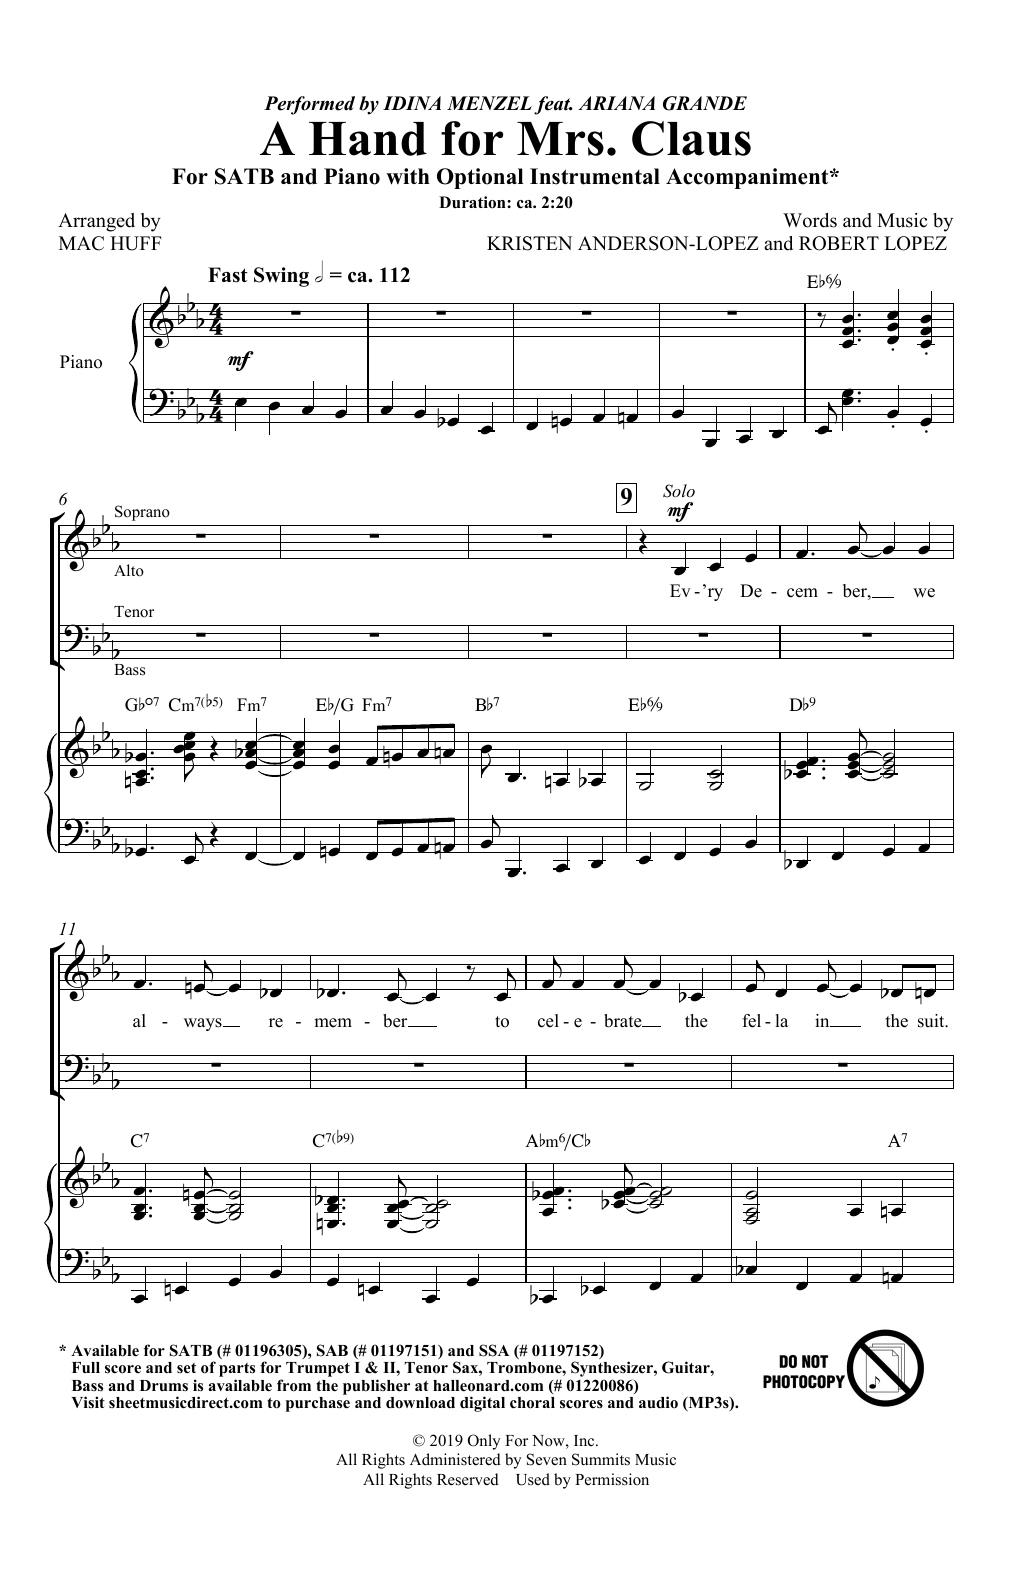 Idina Menzel feat. Ariana Grande A Hand For Mrs. Claus (arr. Mac Huff) Sheet Music Notes & Chords for SAB Choir - Download or Print PDF